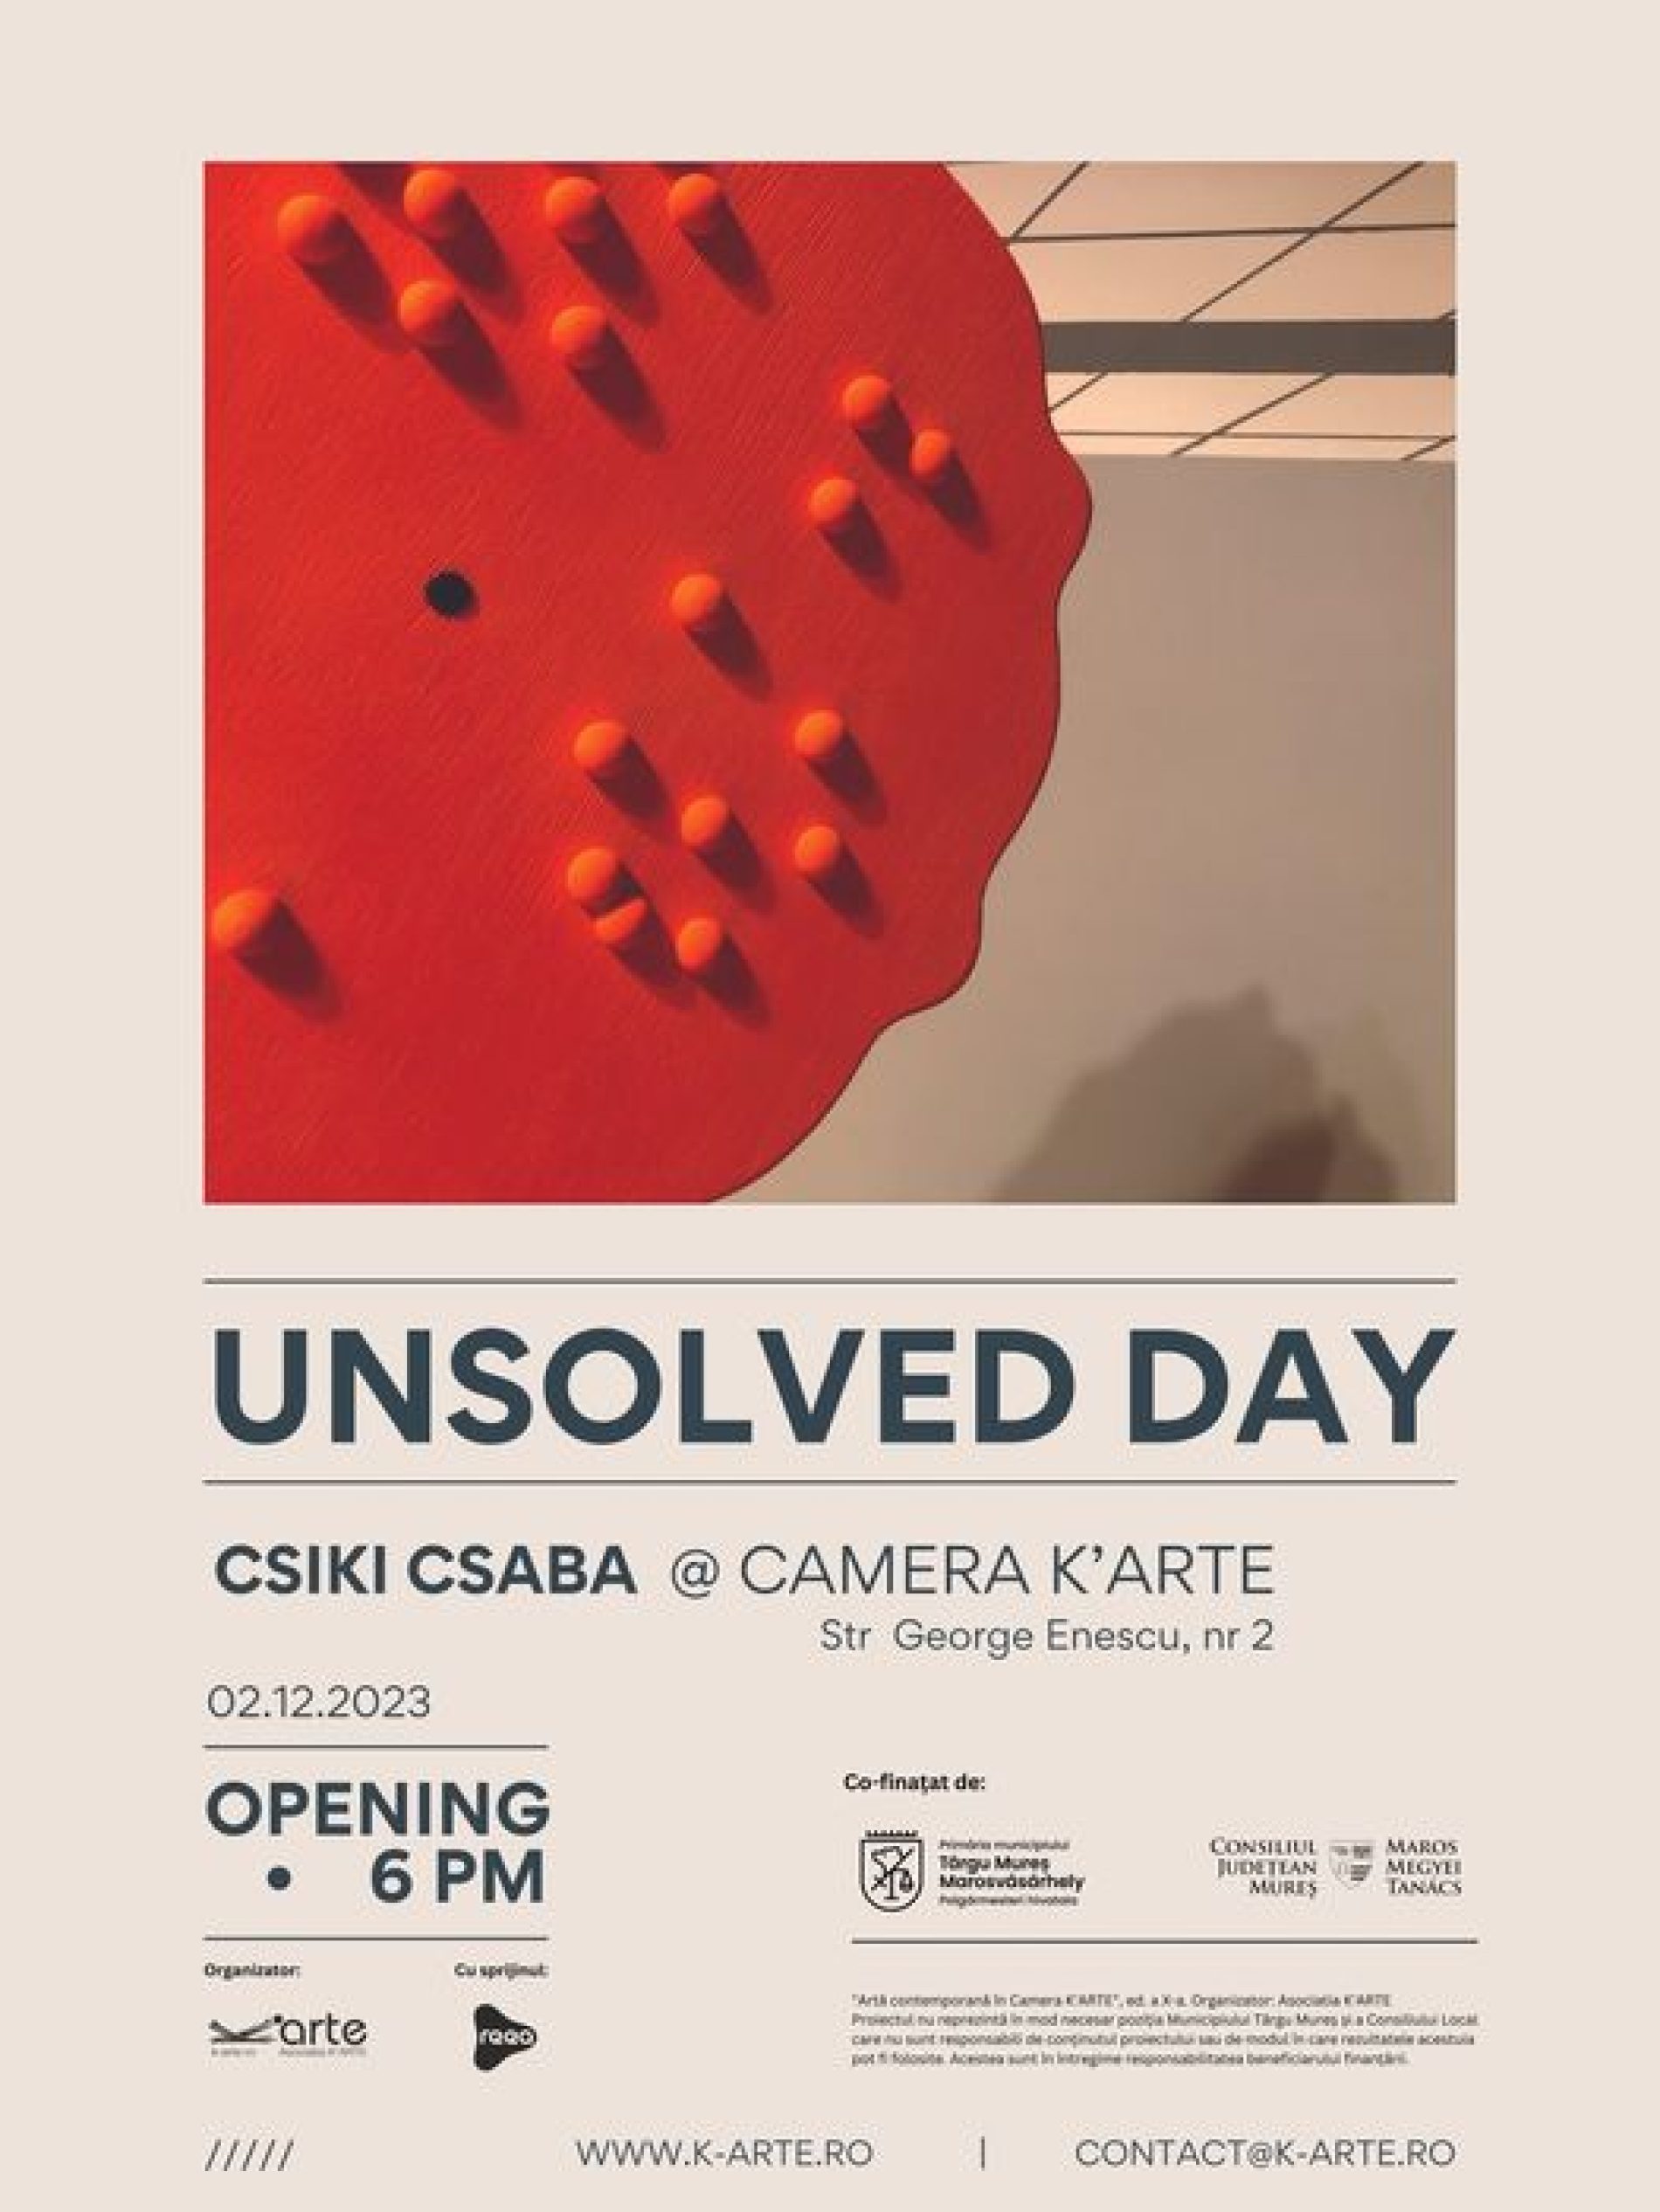 Csiki Csaba – UNSOLVED DAY @ Camera K’ARTE